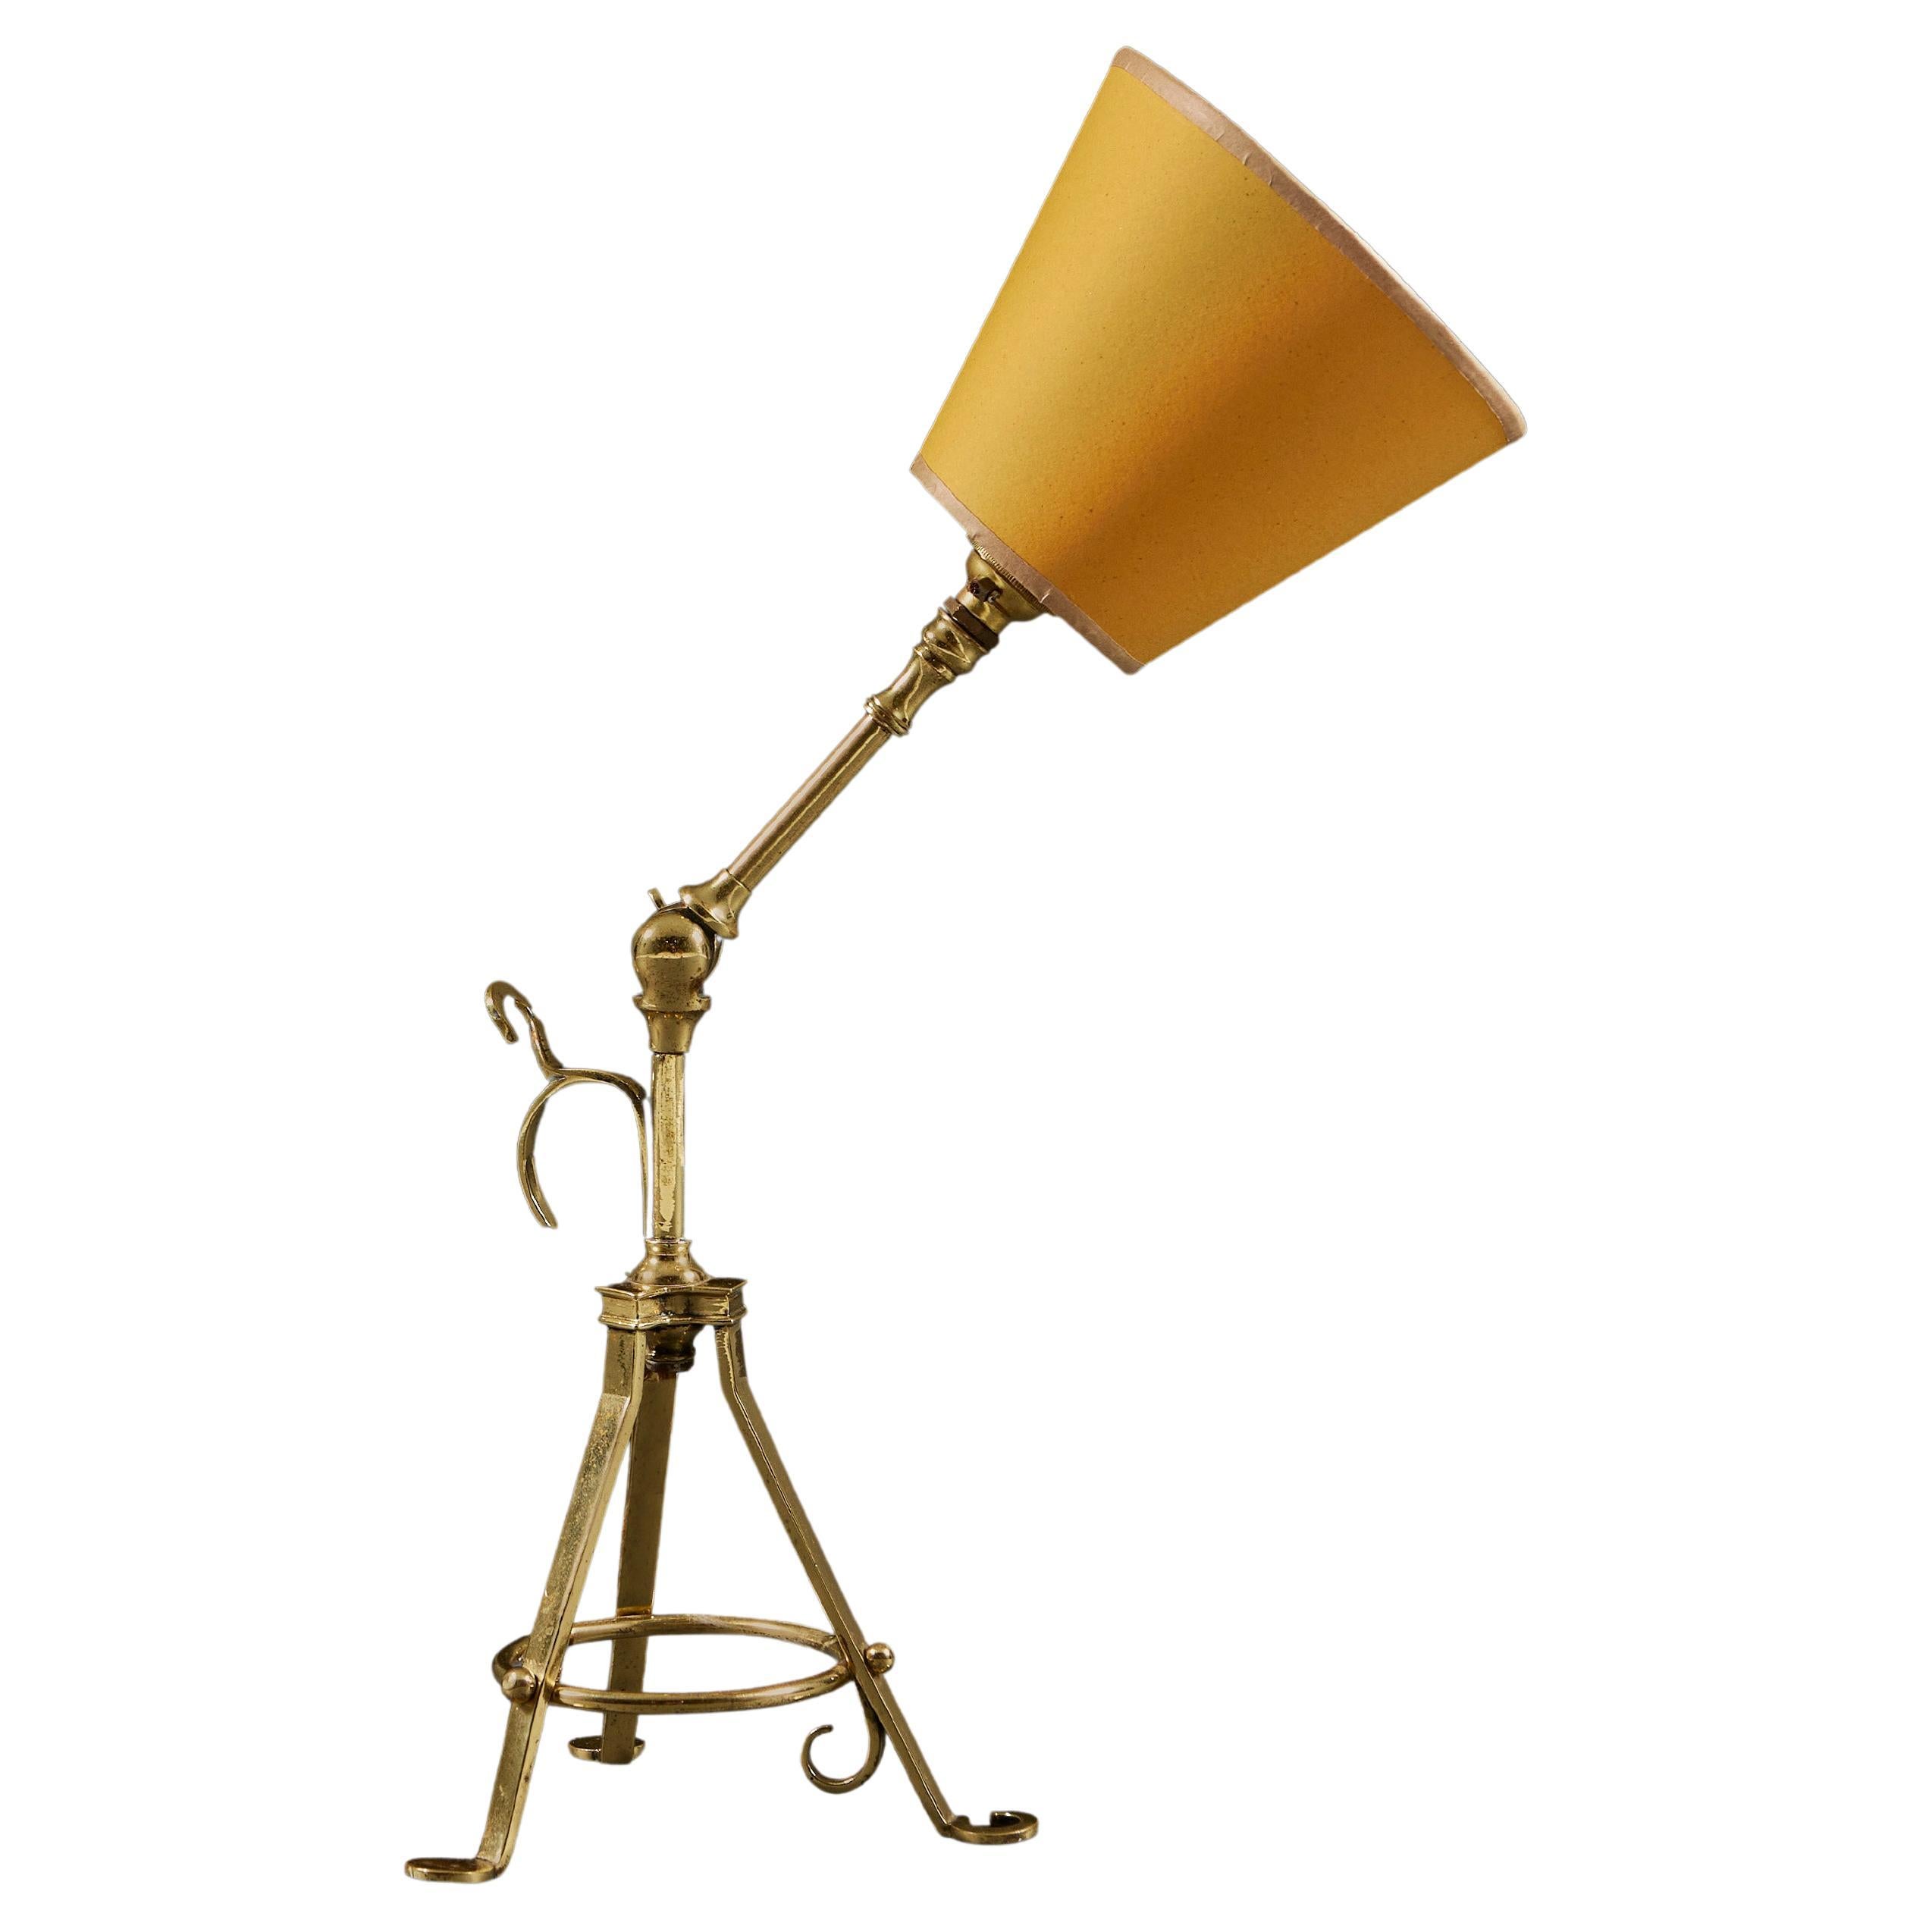 A Benson Brass Tripod Lamp For Sale